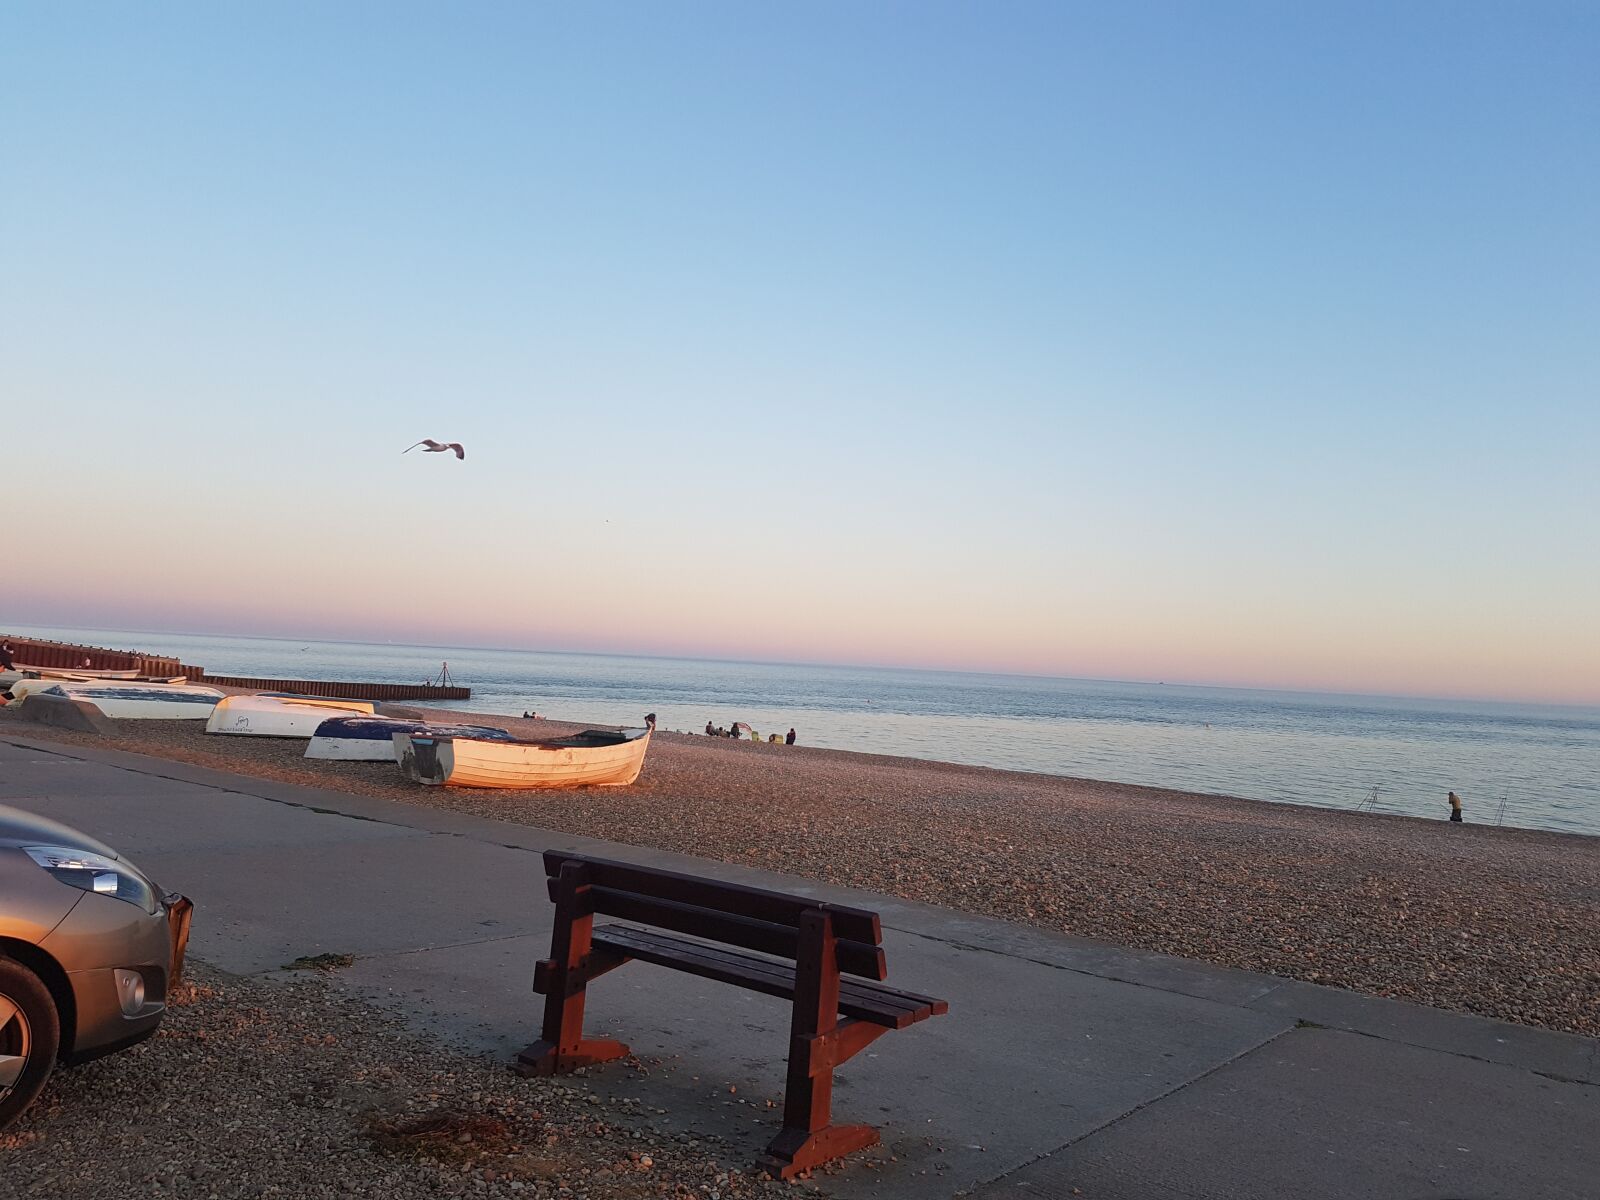 Samsung Galaxy S7 sample photo. Beach, boats, sunset photography